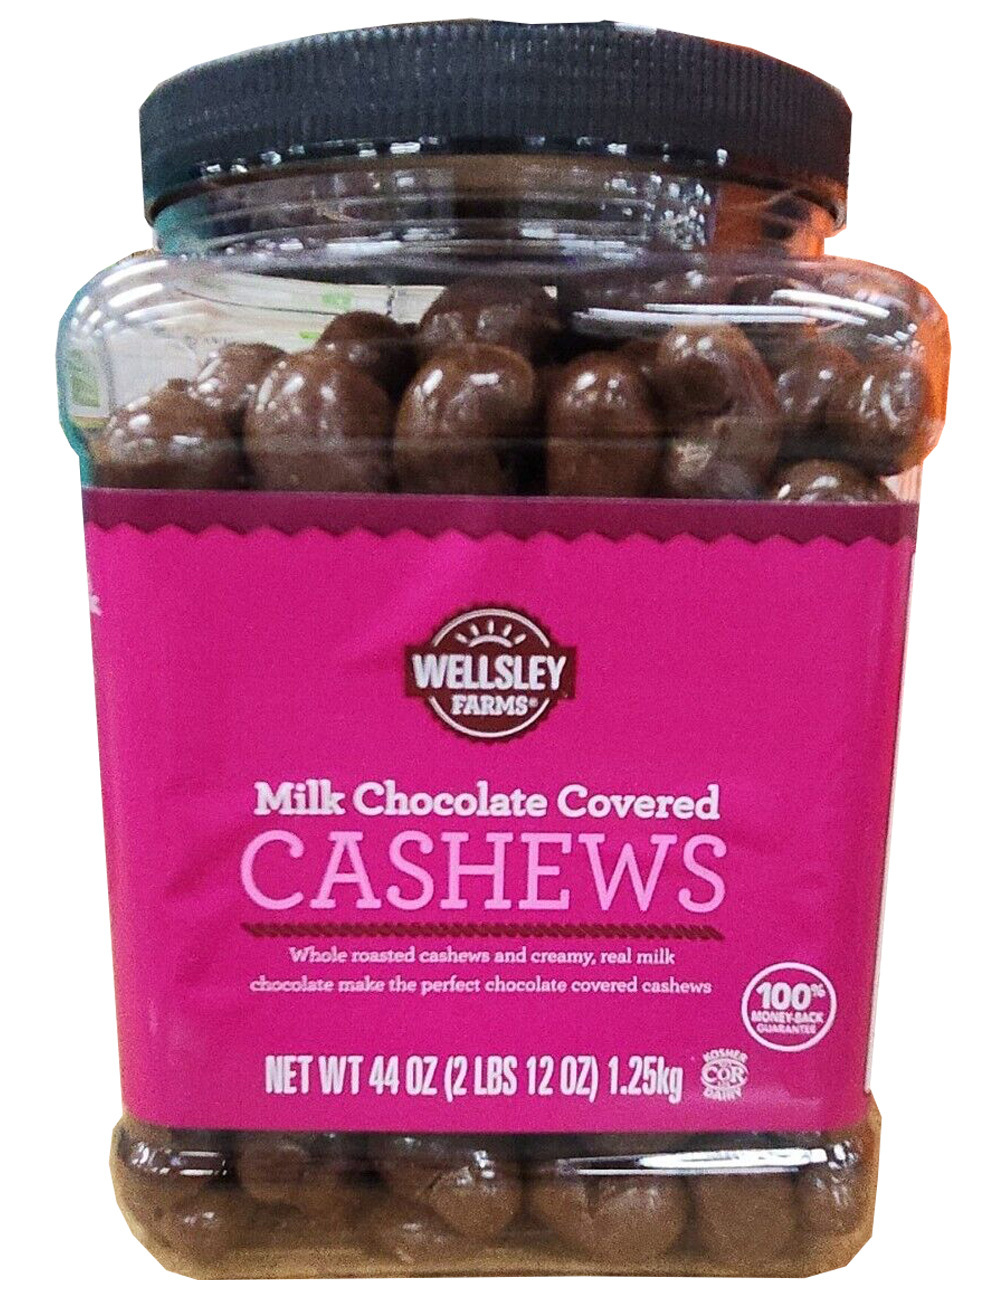 Wellsley Farms Milk Chocolate Covered Cashews, 44 Oz Kosher Free Shipping - $30.39